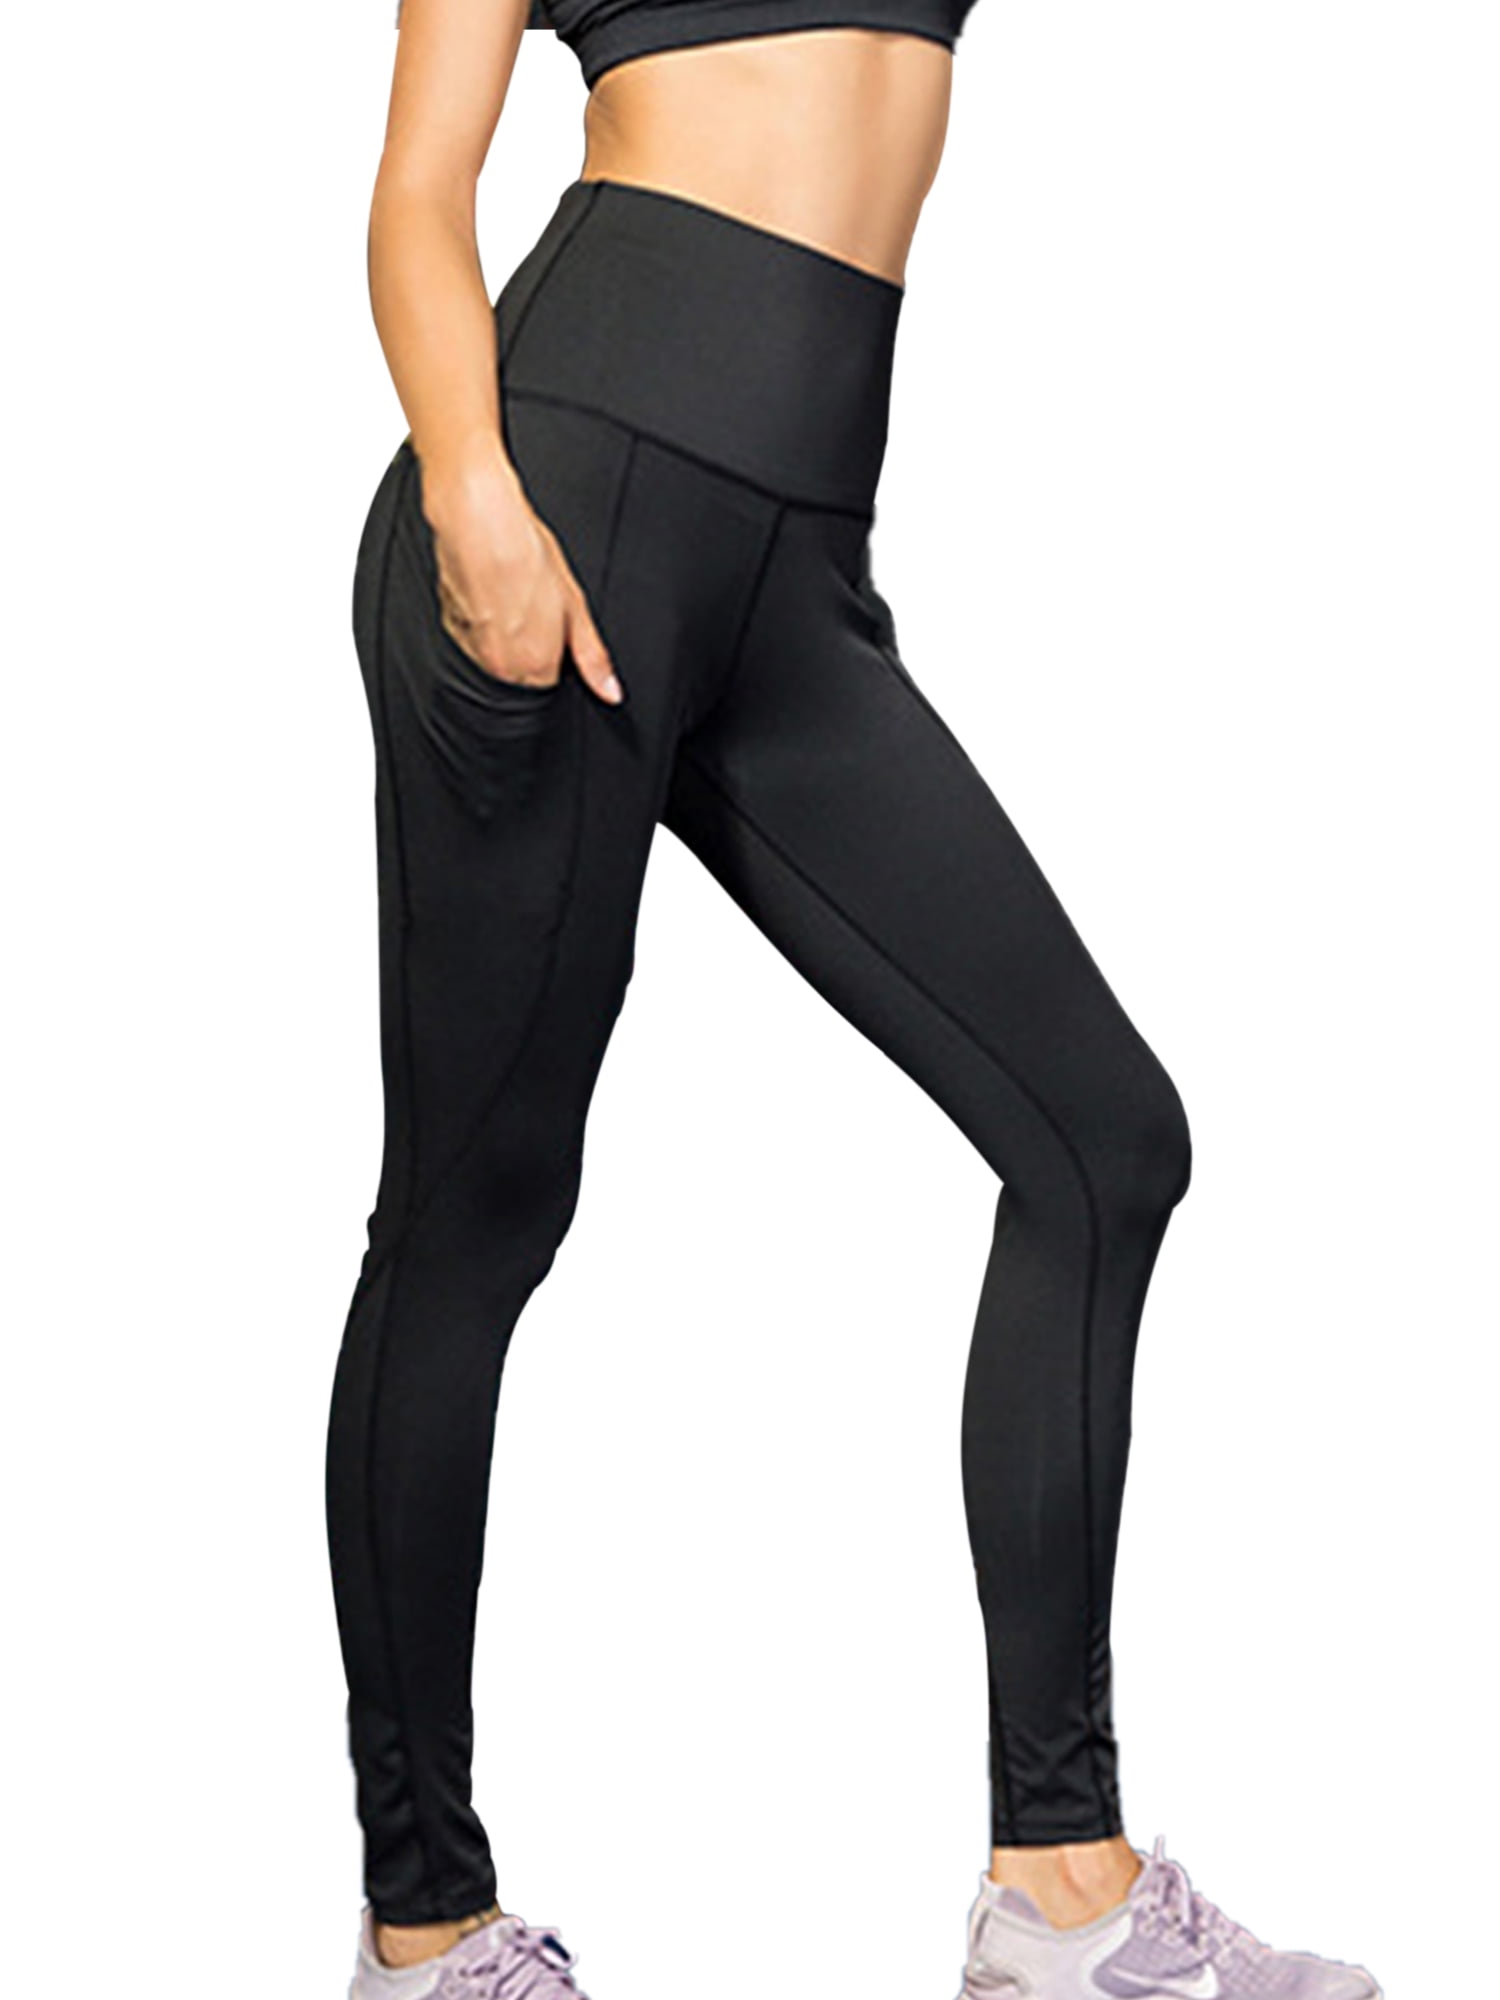 HSJOTT Womens High Waisted Yoga Pants Glasses Comfy Sports Leggings